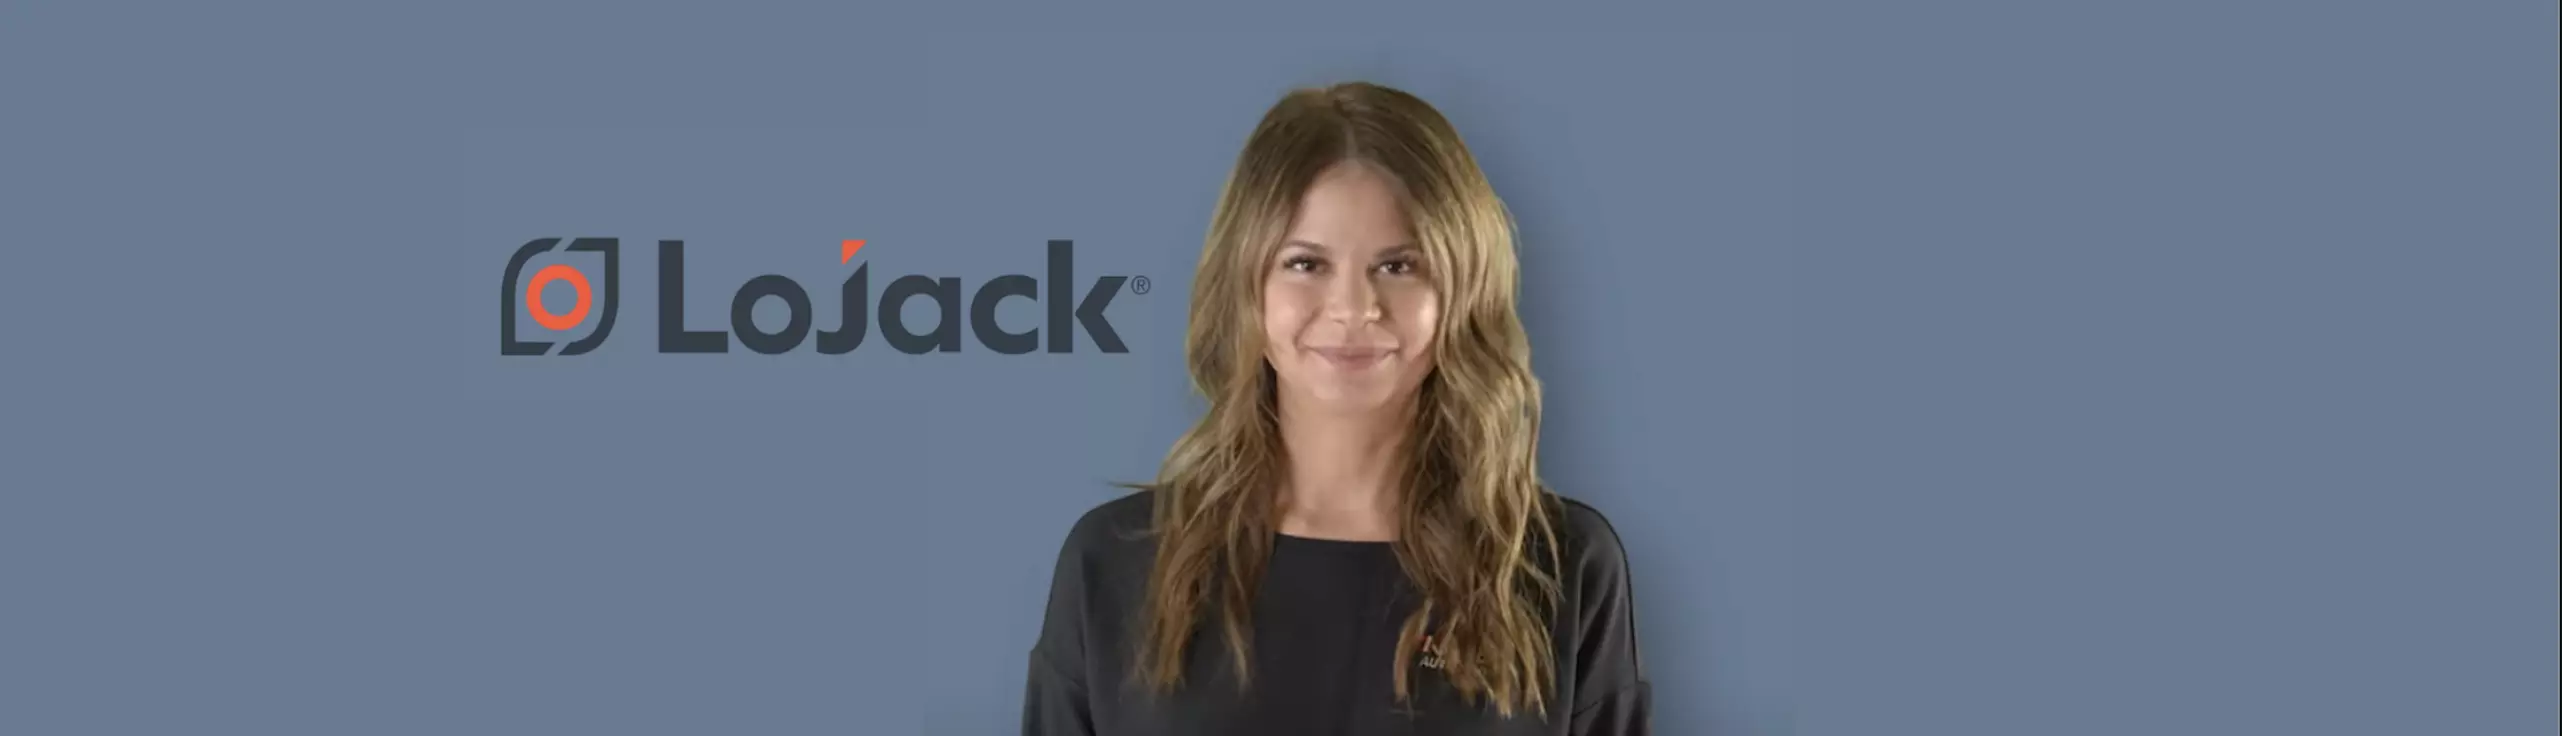 LoJack Logo next to smiling women